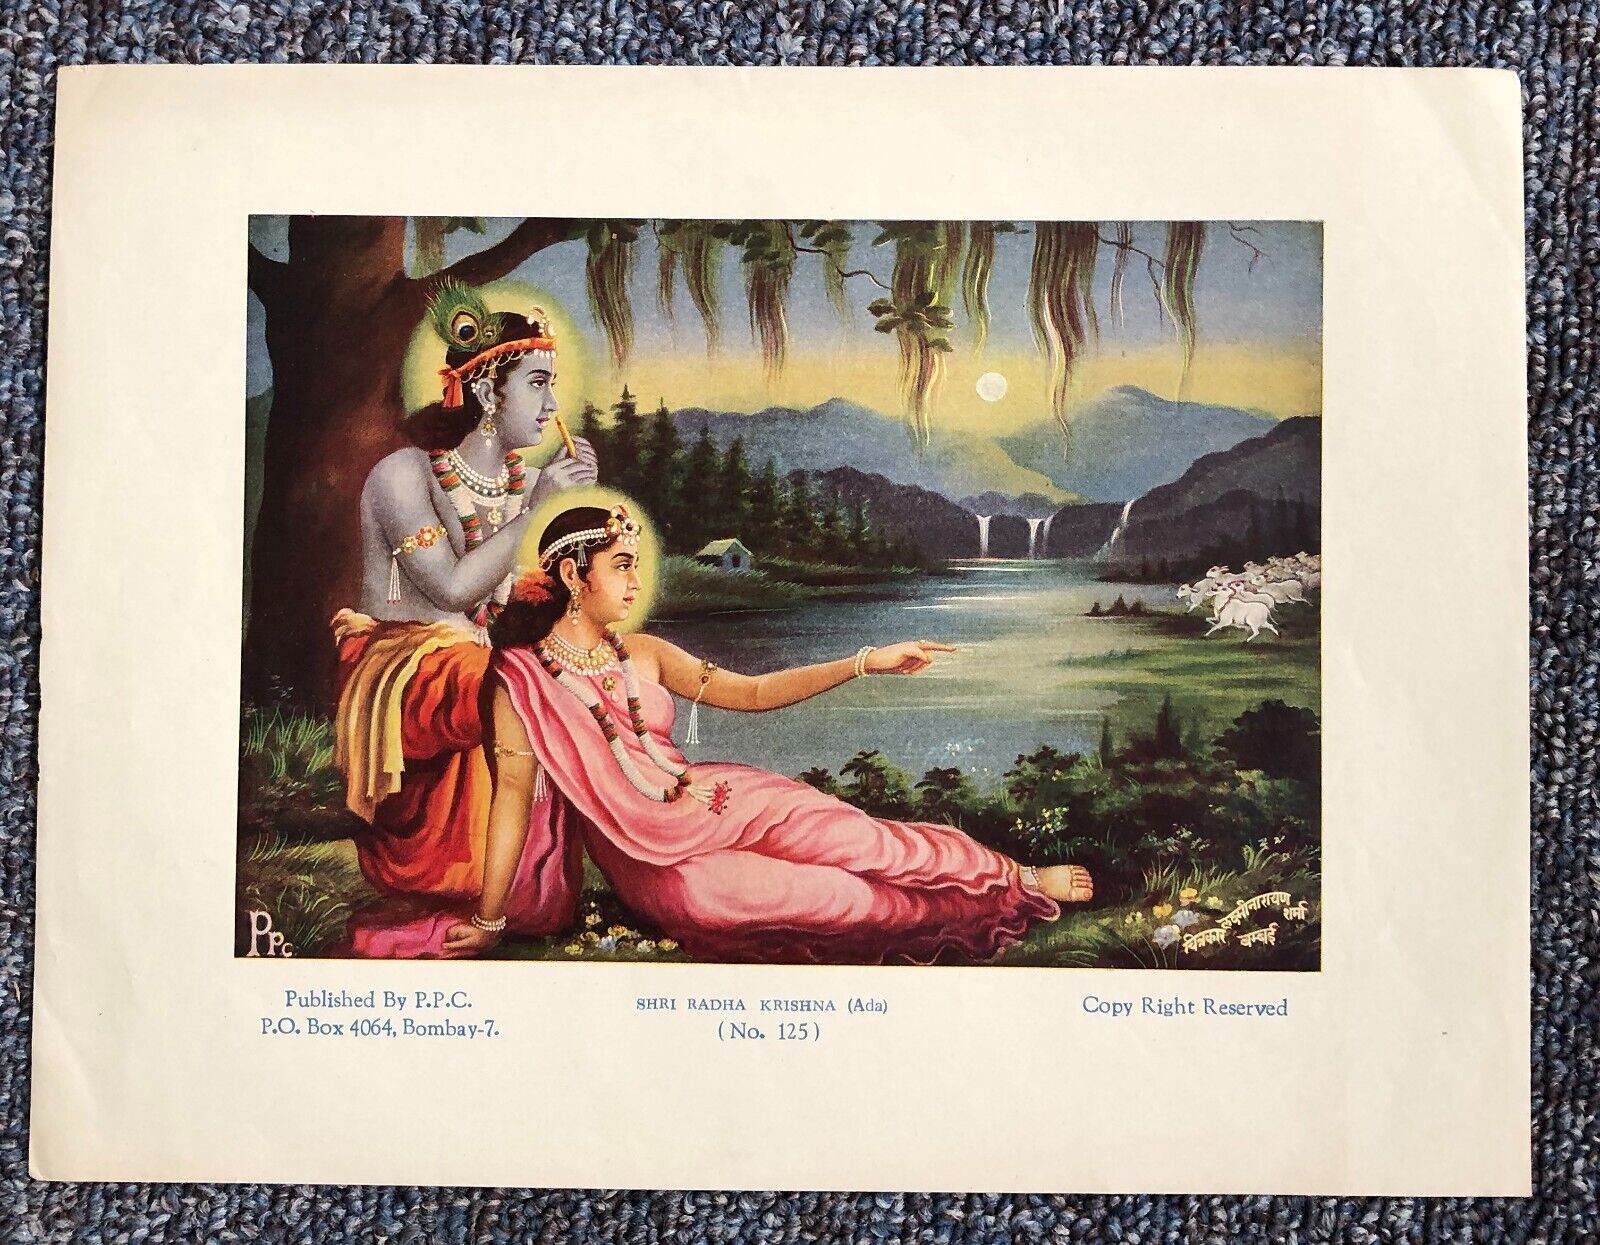 (1101) Rare Antique Hindu Art Print from India, c. 1940s: Lord Krishna & Radha